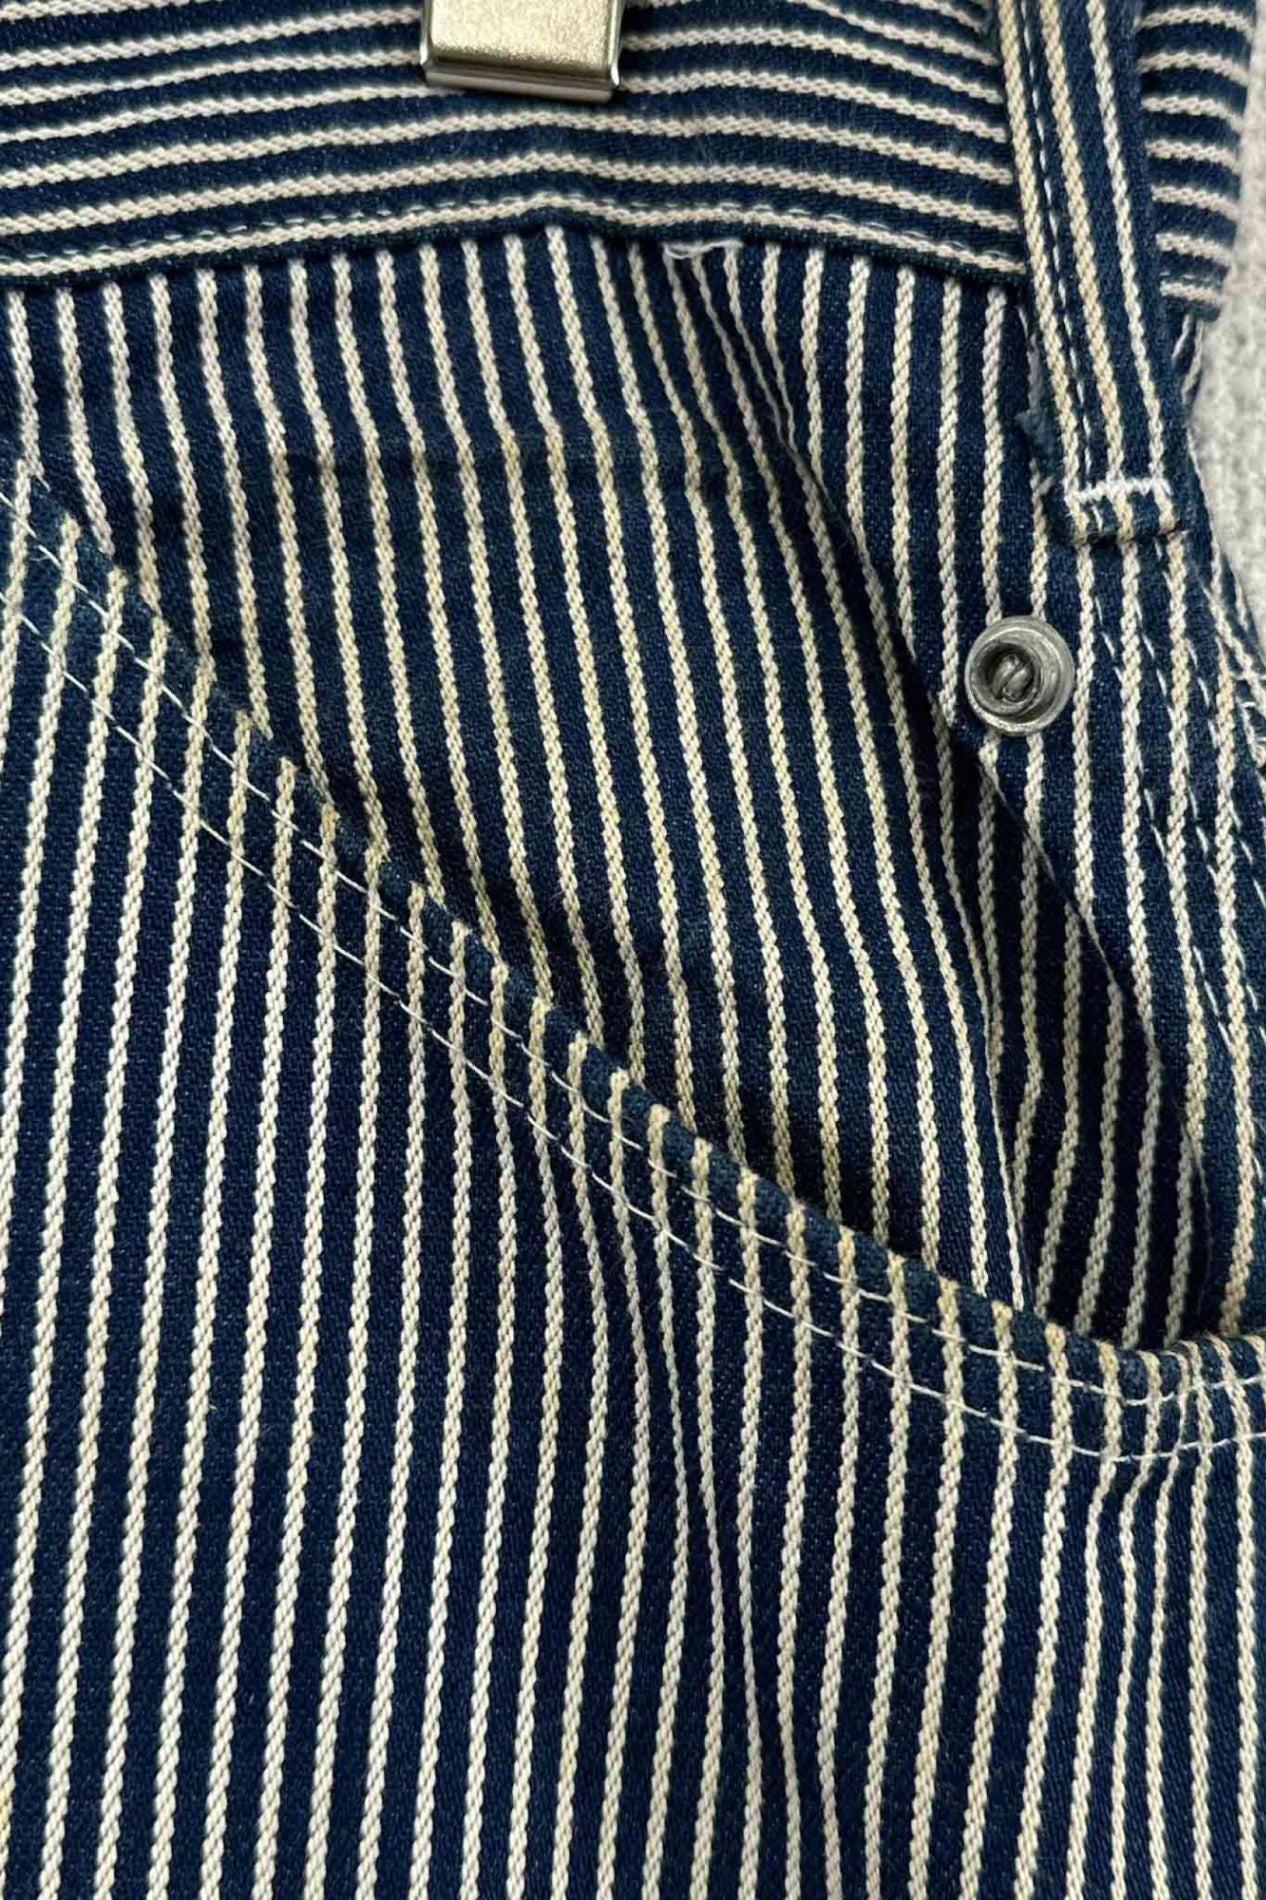 POINTER BRAND blue striped pants